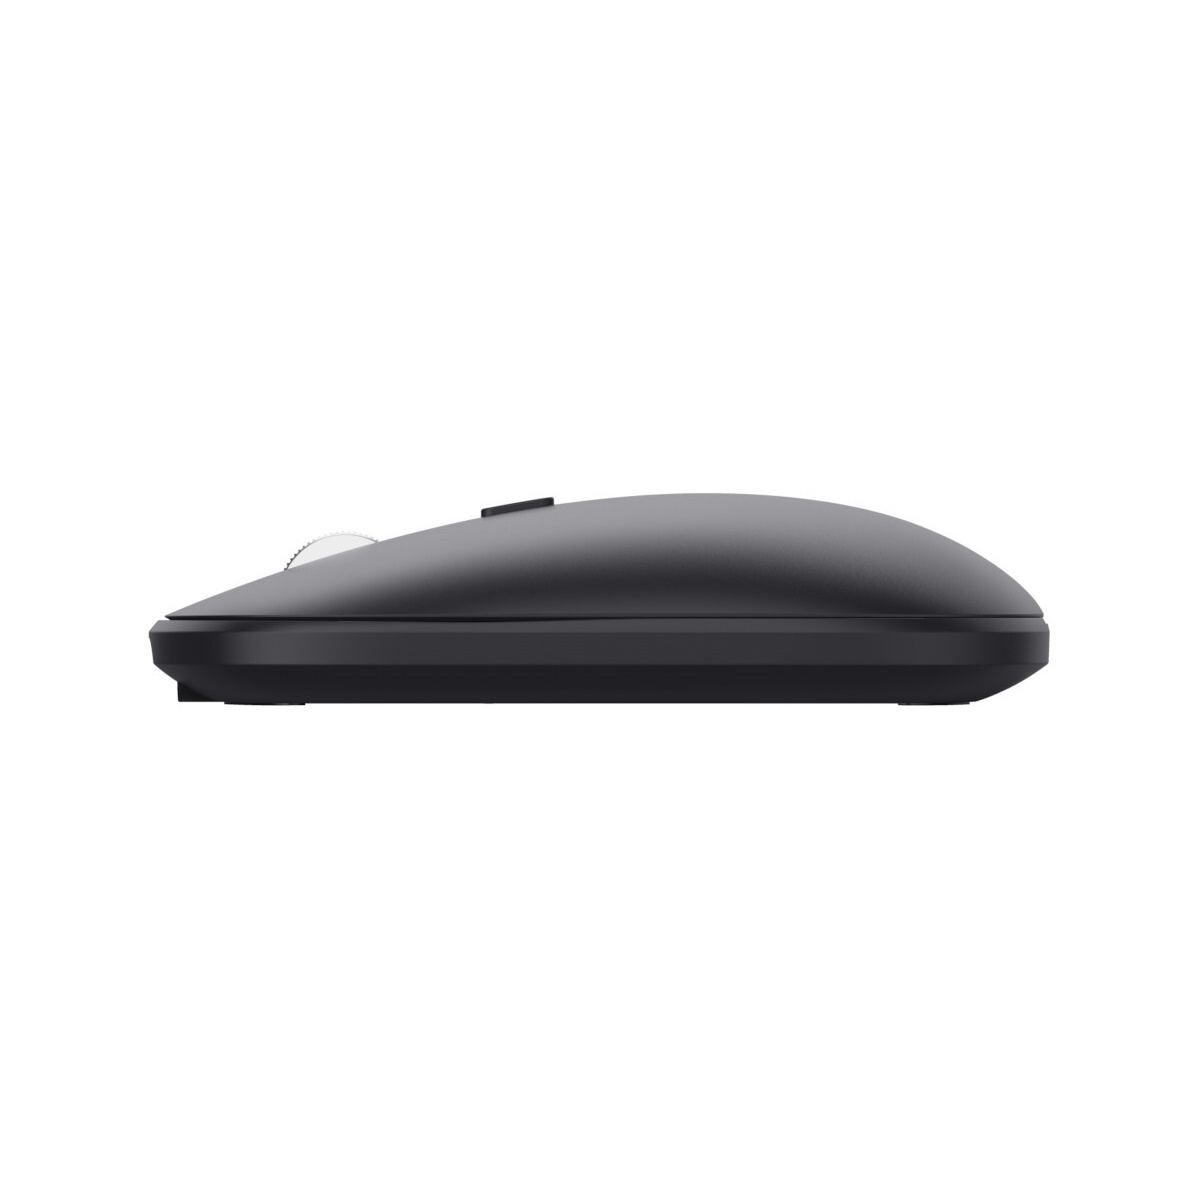 Bild von Lyra Multi-Device Wireless Keyboard & Mouse Set, schwarz, USB/Bluetooth, DE (24845)